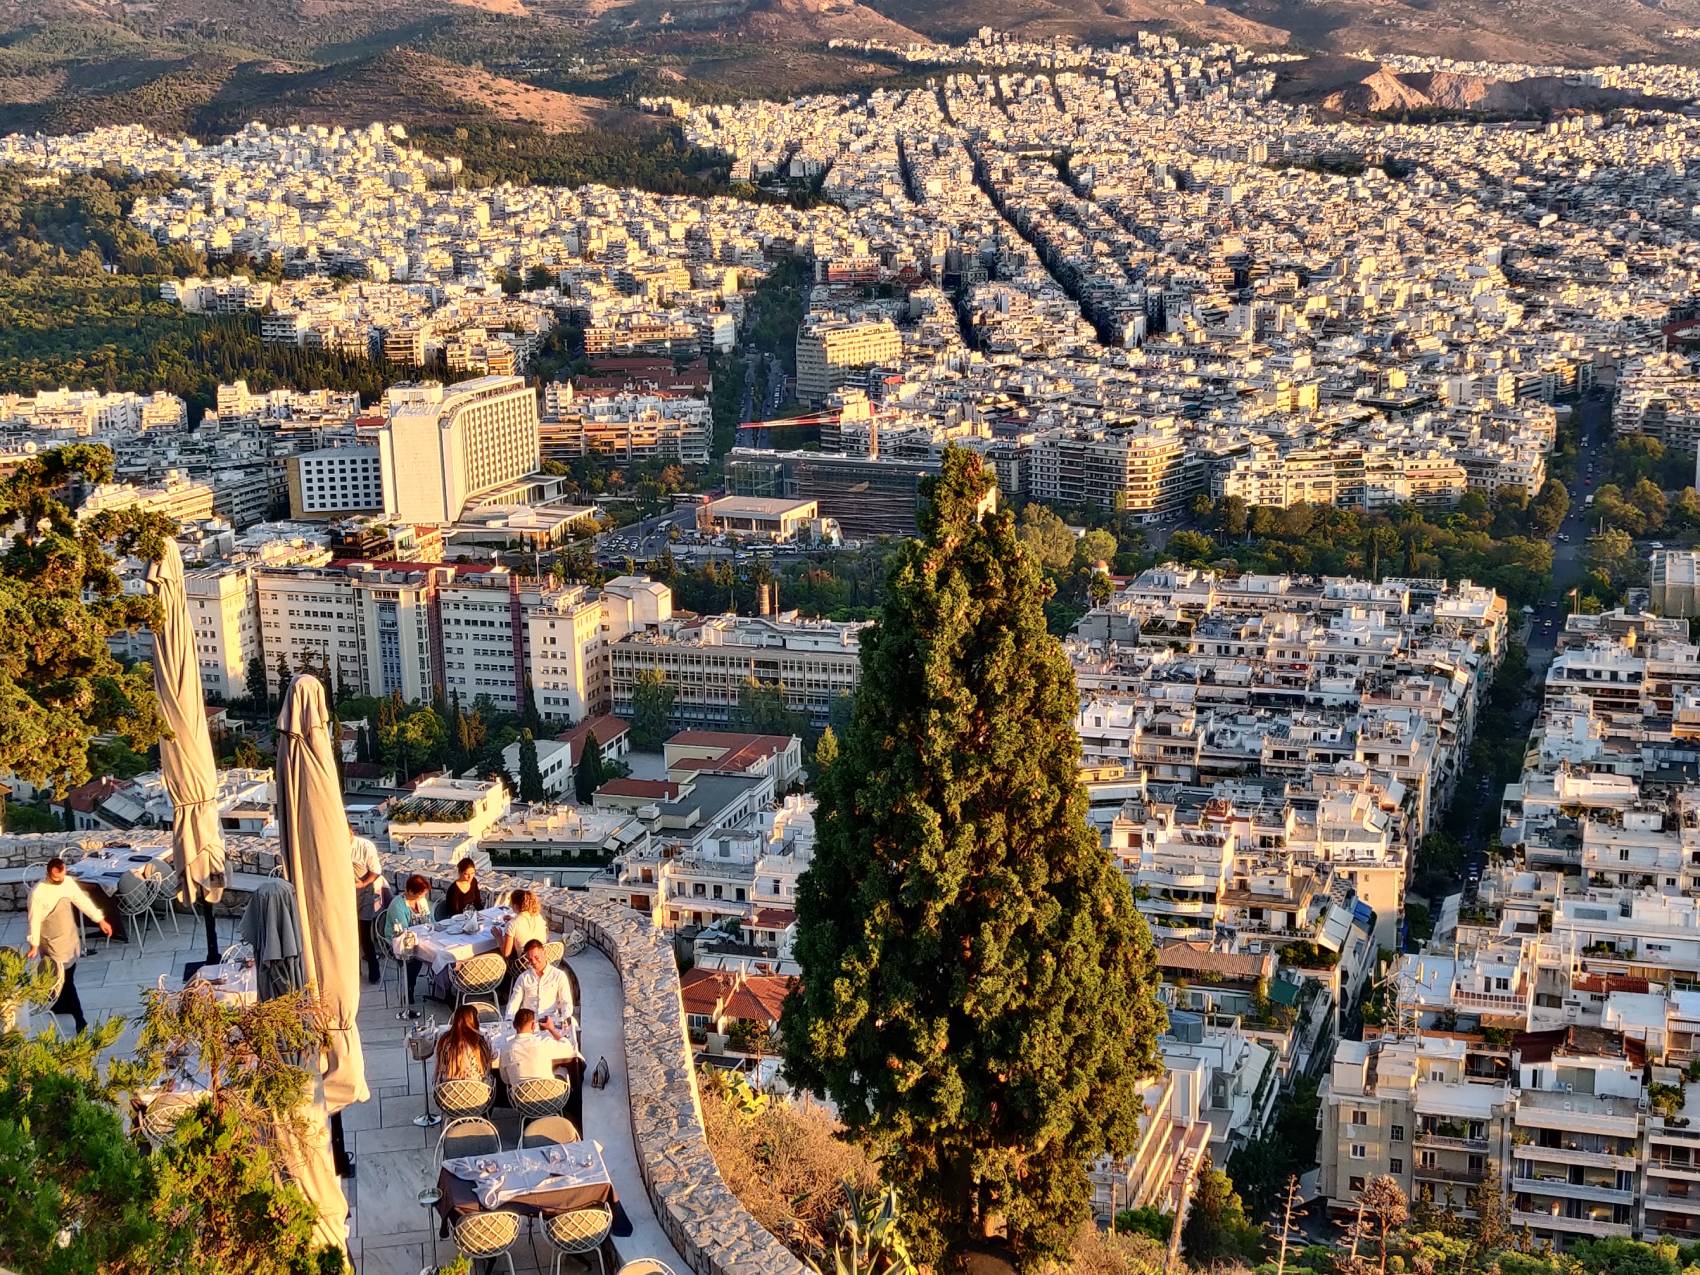 Back in Athens: Ένας οδηγός για σινεμά, φαγητό και καφέ στην Αθήνα